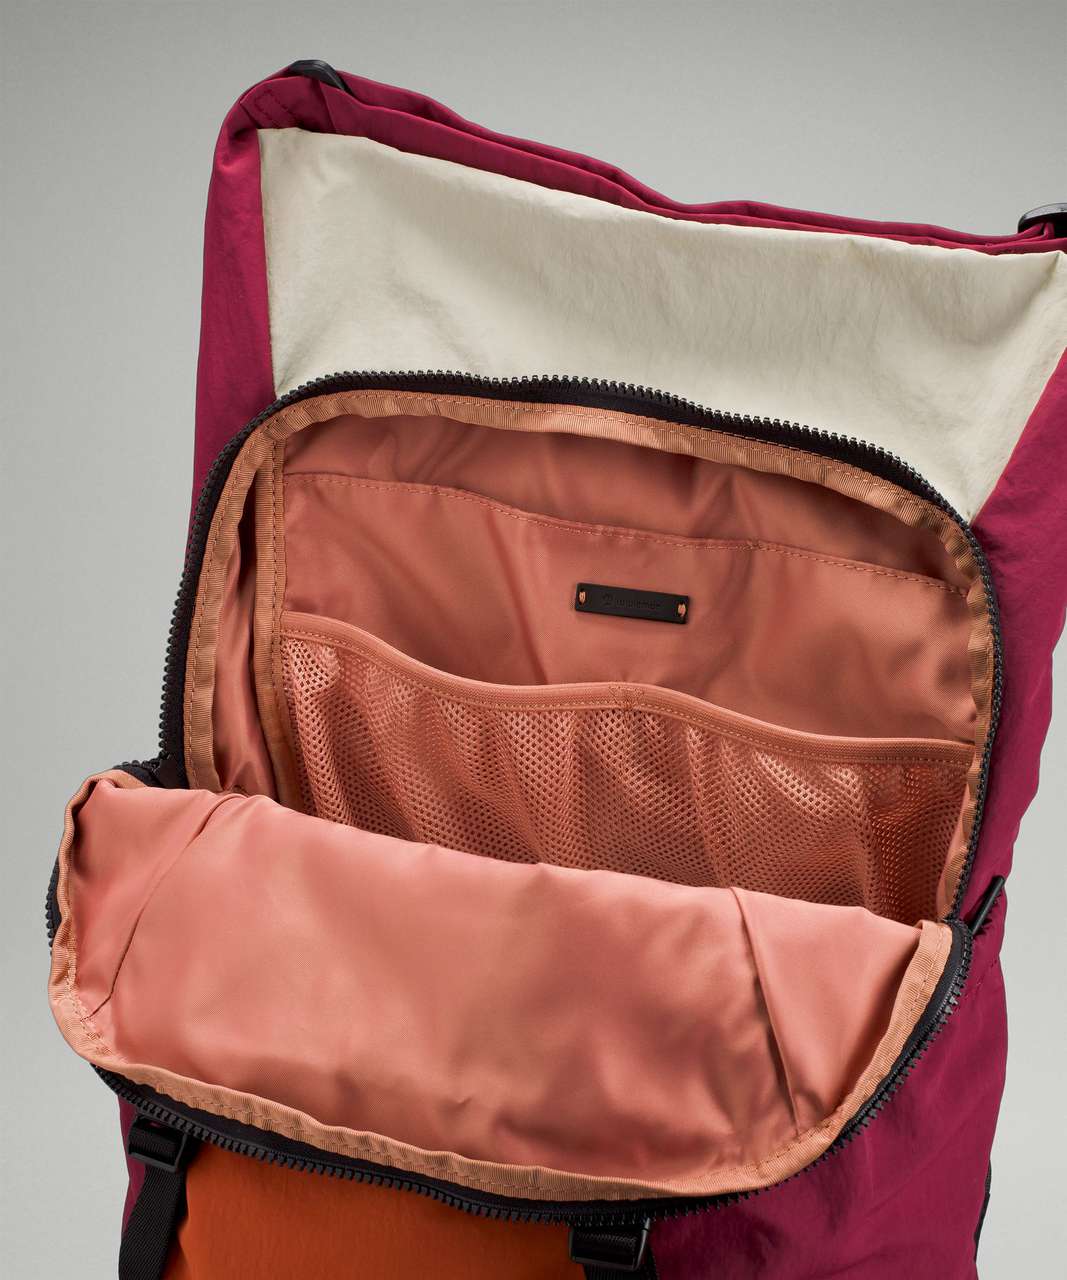 Lululemon Pack and Go Backpack 21L - Mulled Wine / Canyon Orange / Pink Savannah